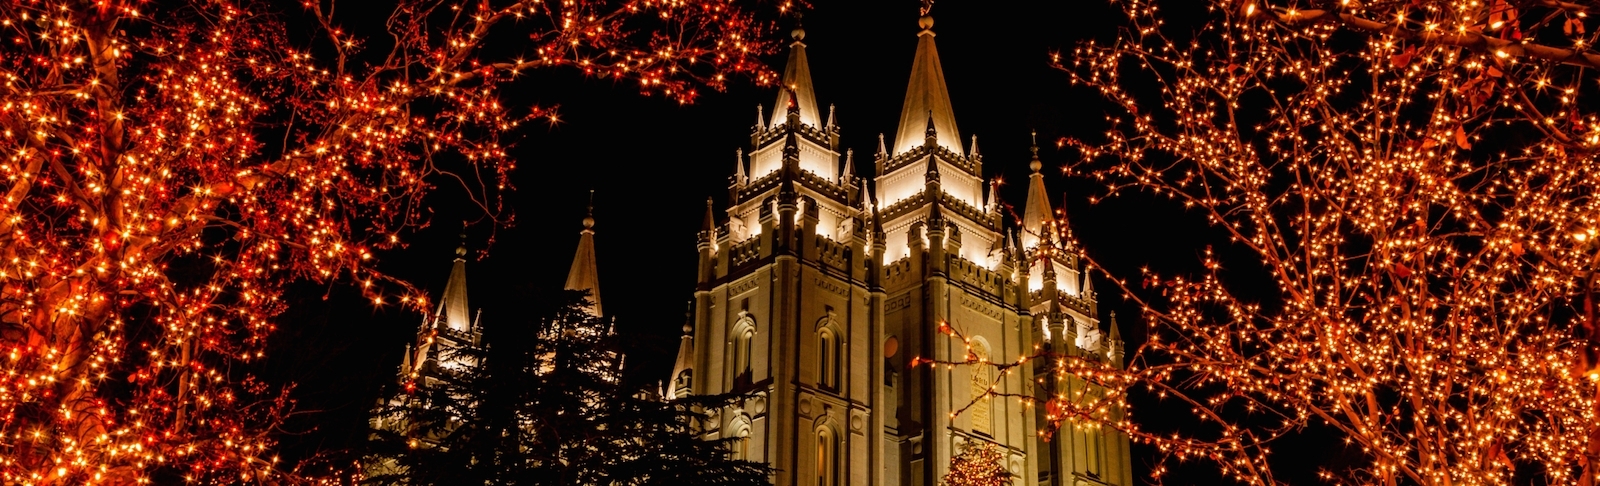 Temple Square Christmas Lights | My Local Utah